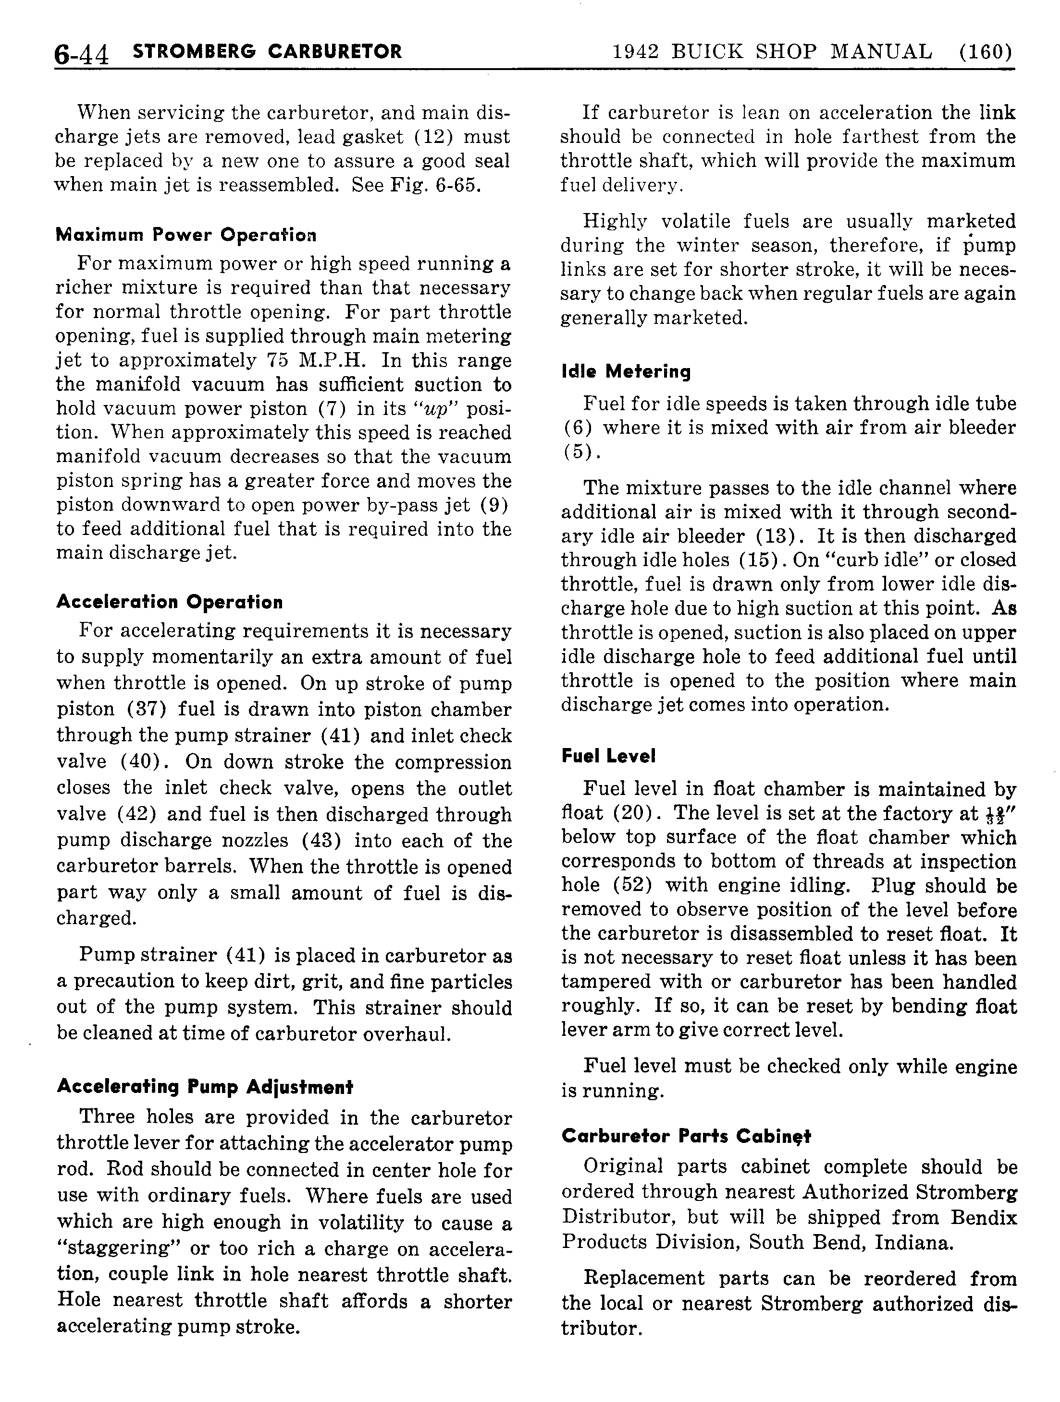 n_07 1942 Buick Shop Manual - Engine-045-045.jpg